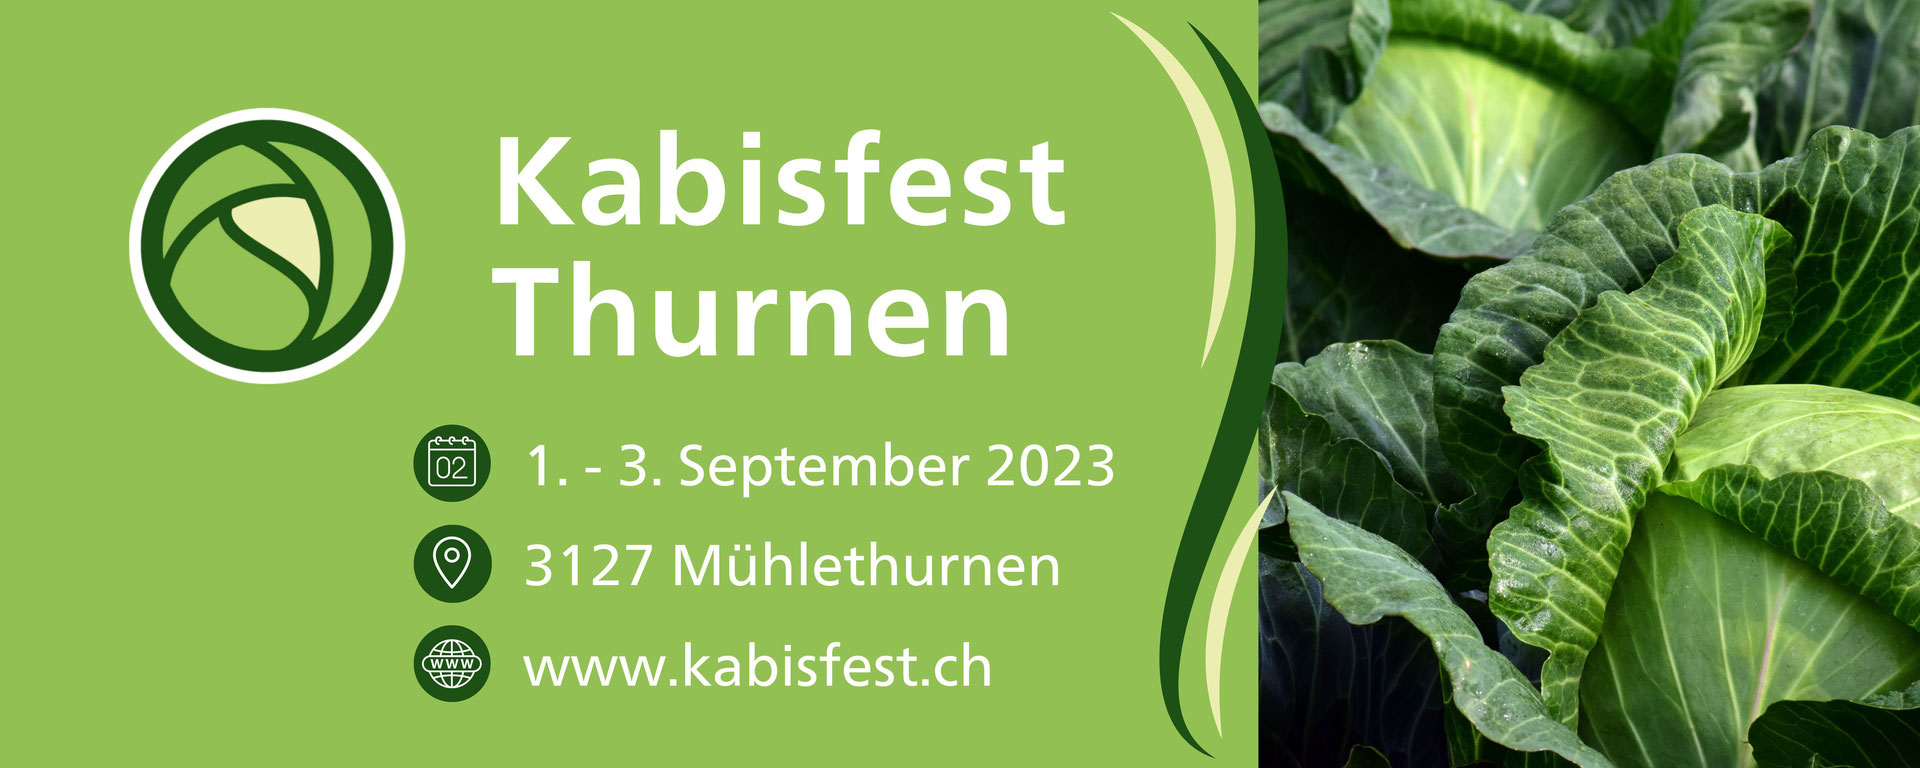 (c) Kabisfest.ch